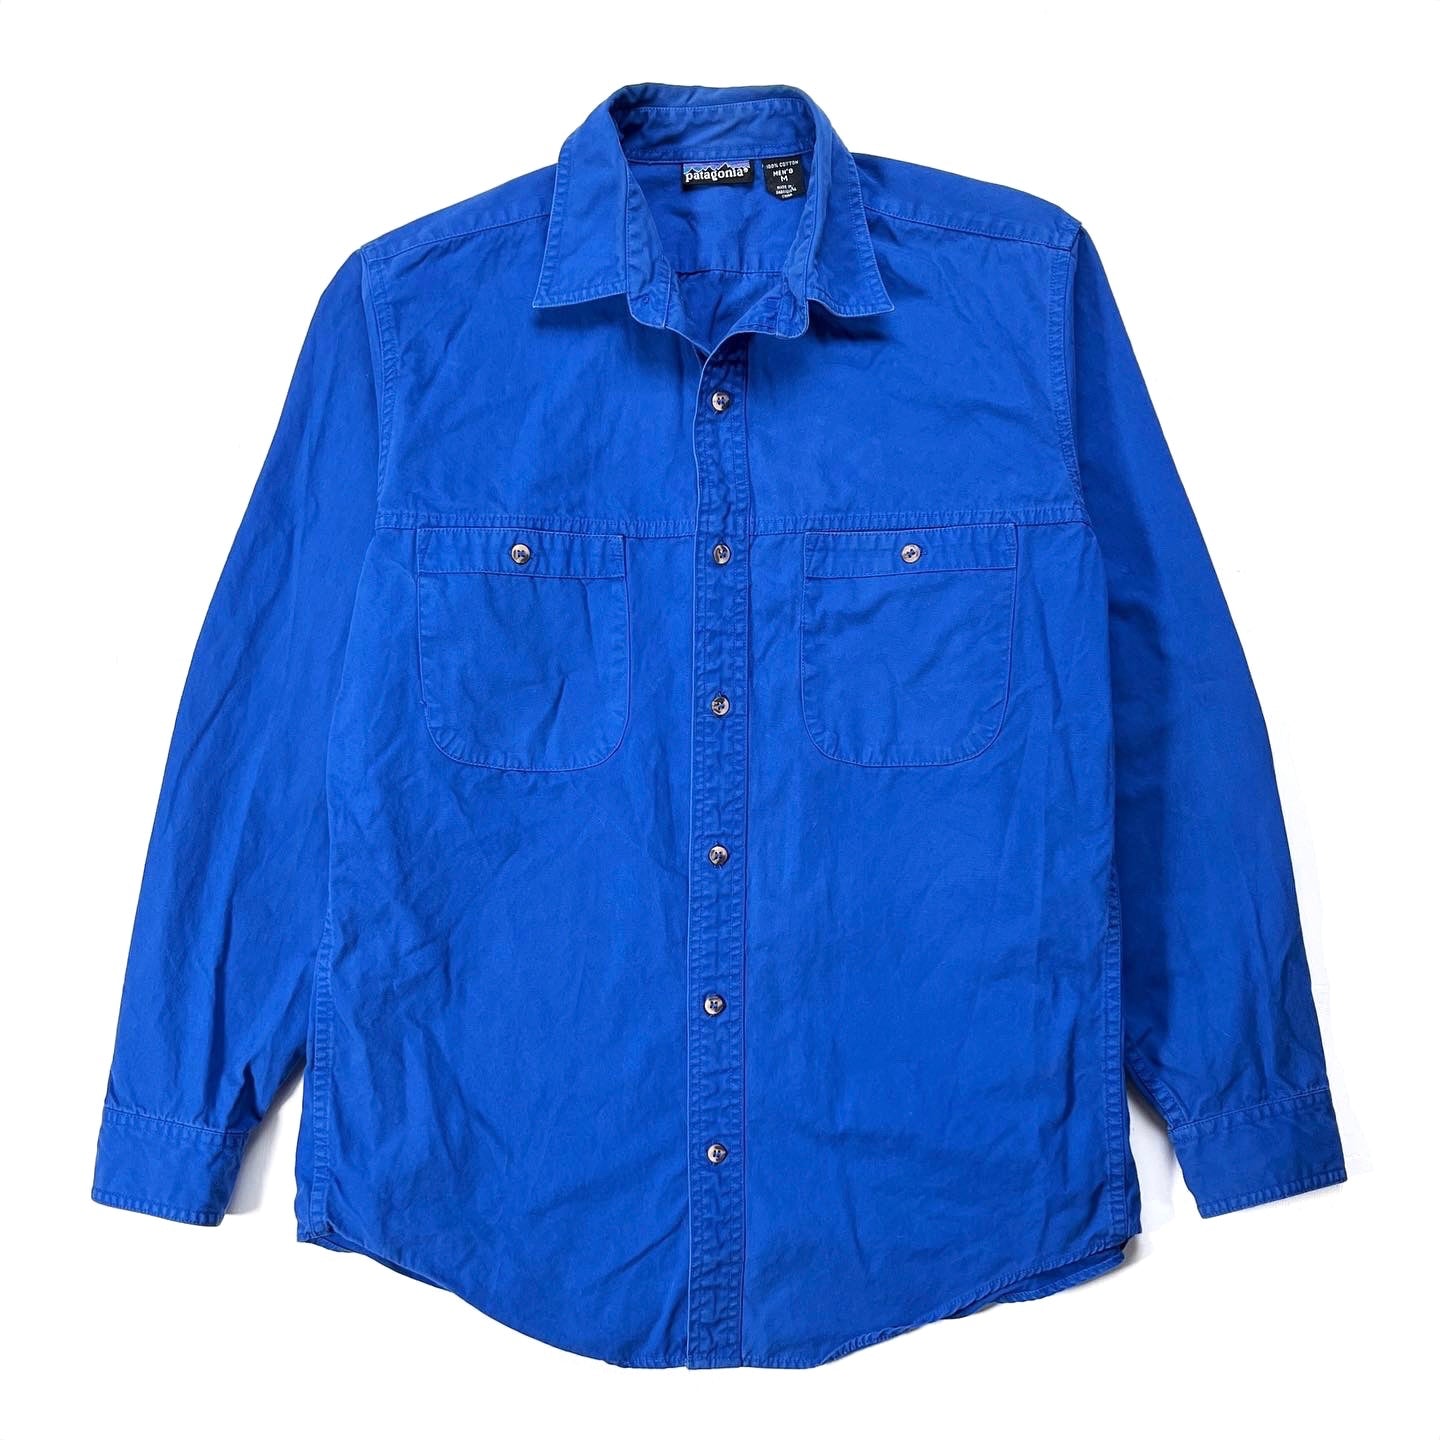 1984 Patagonia Lightweight Garment Dyed Canvas Shirt (M)